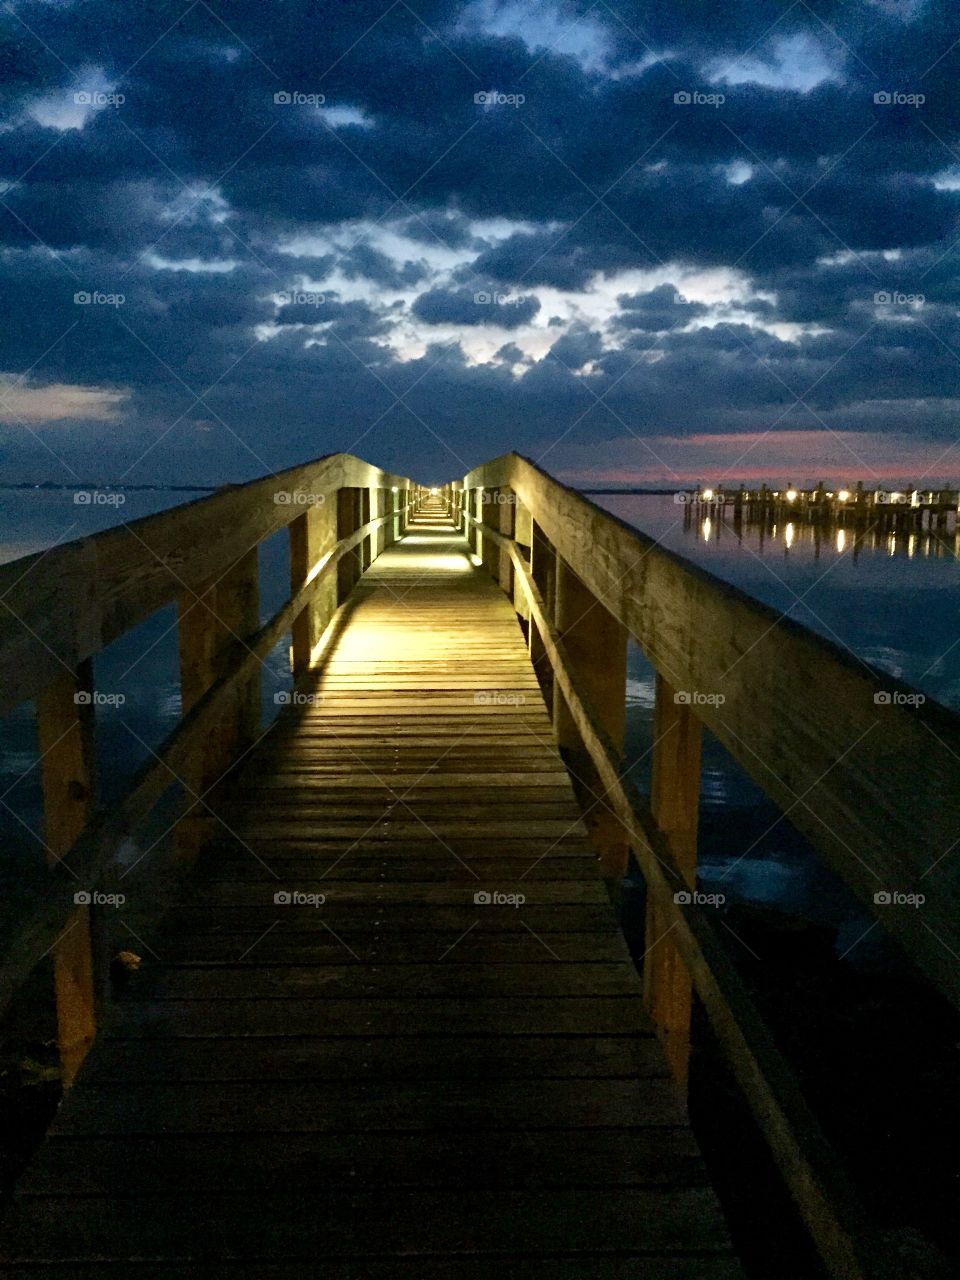 The pier